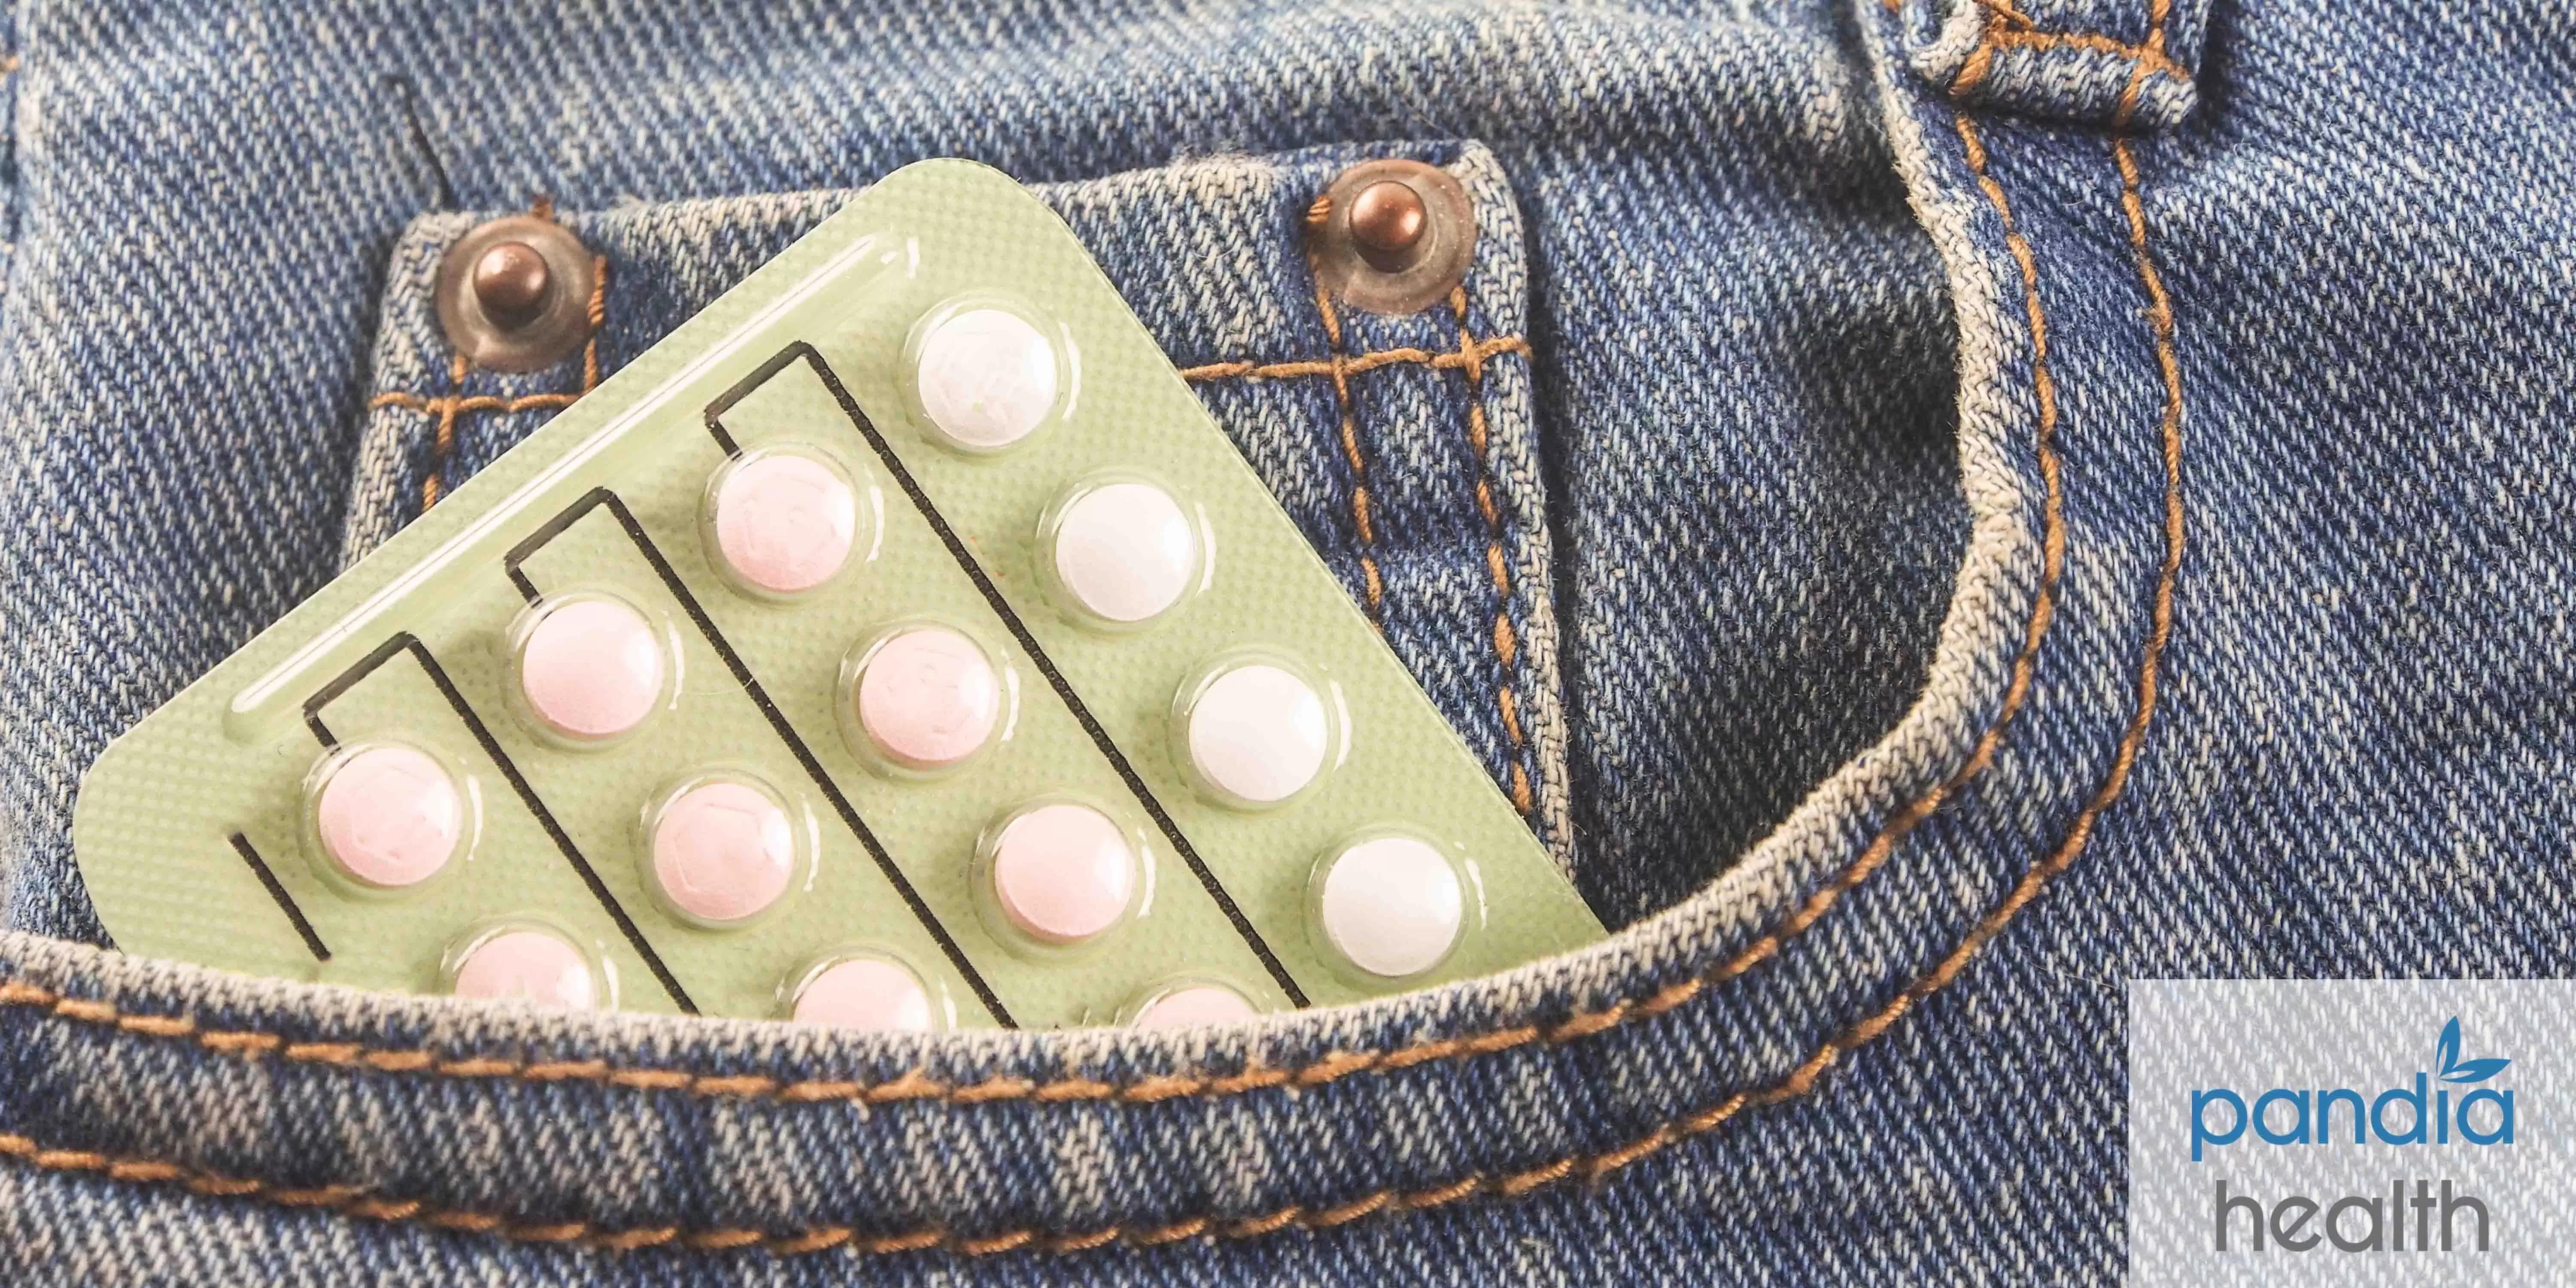 Birth control pill packet in denim jean pants pocket